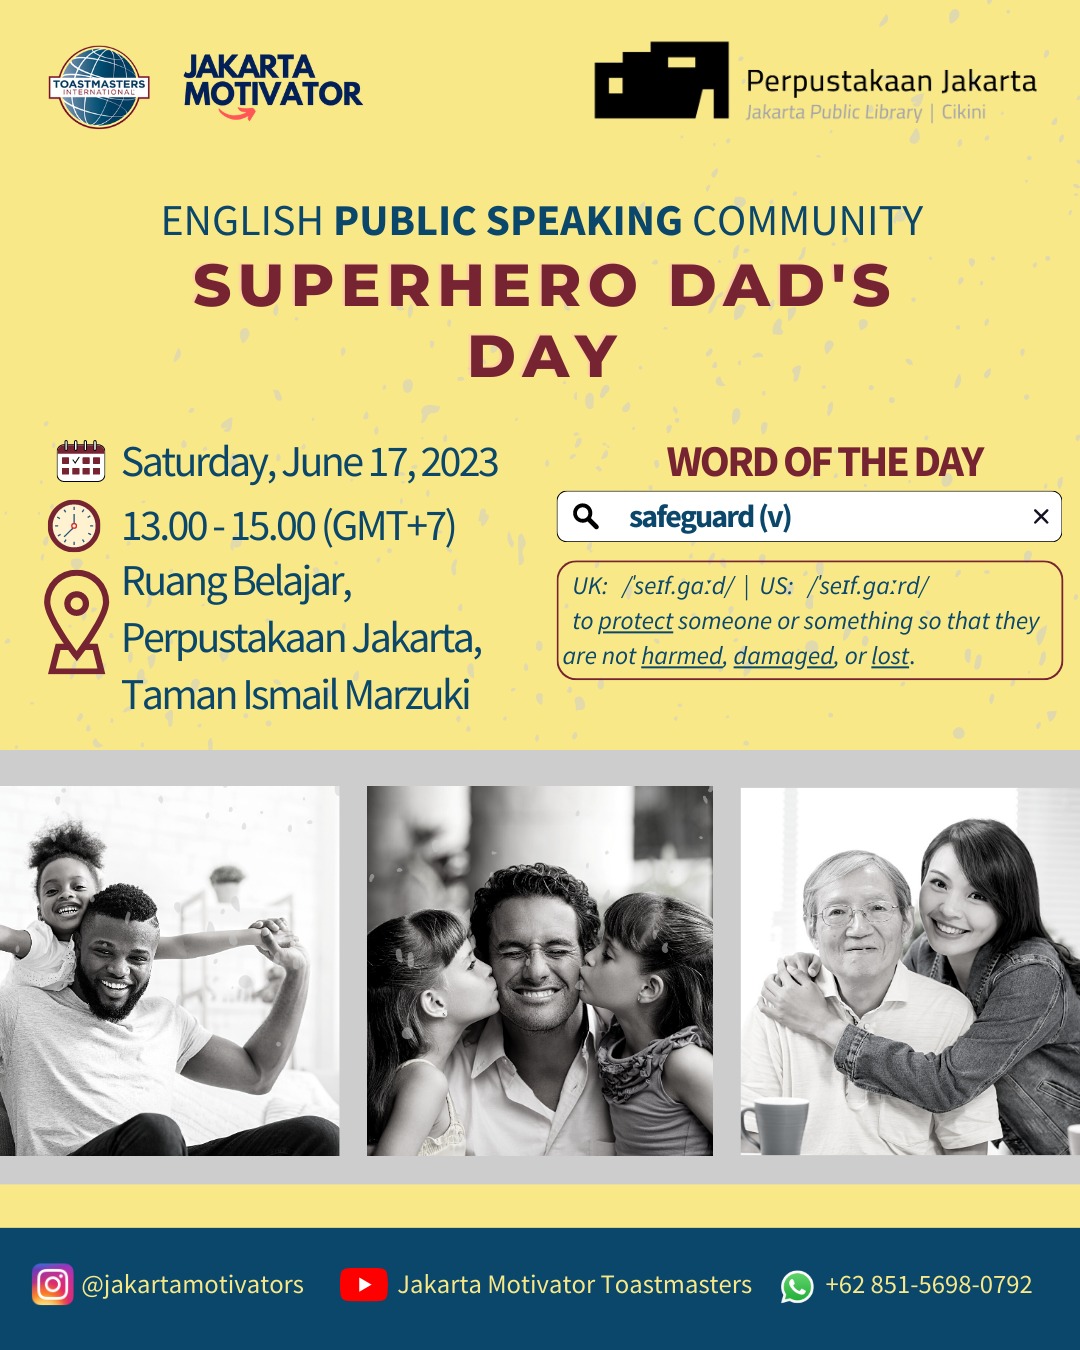 Superhero Dad's Day - English Public Speaking